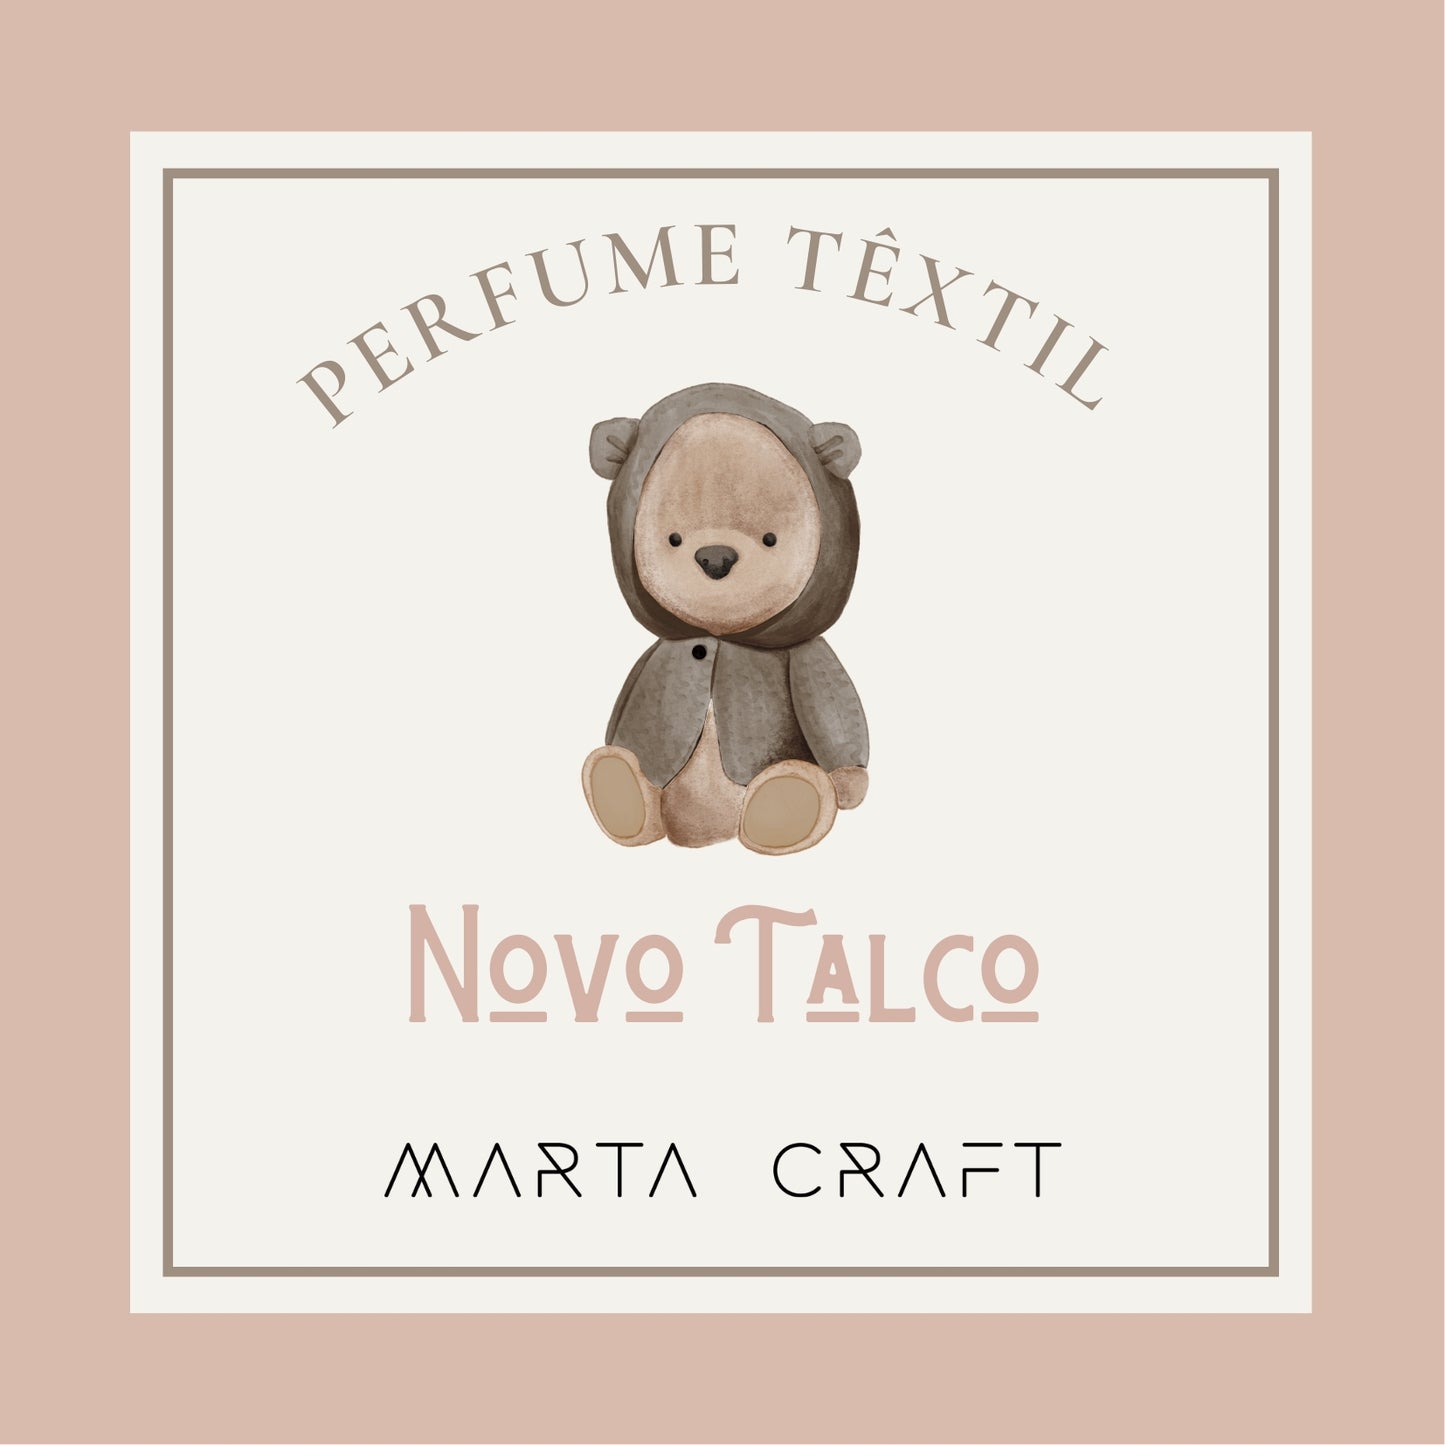 Perfume Têxtil - New Talco